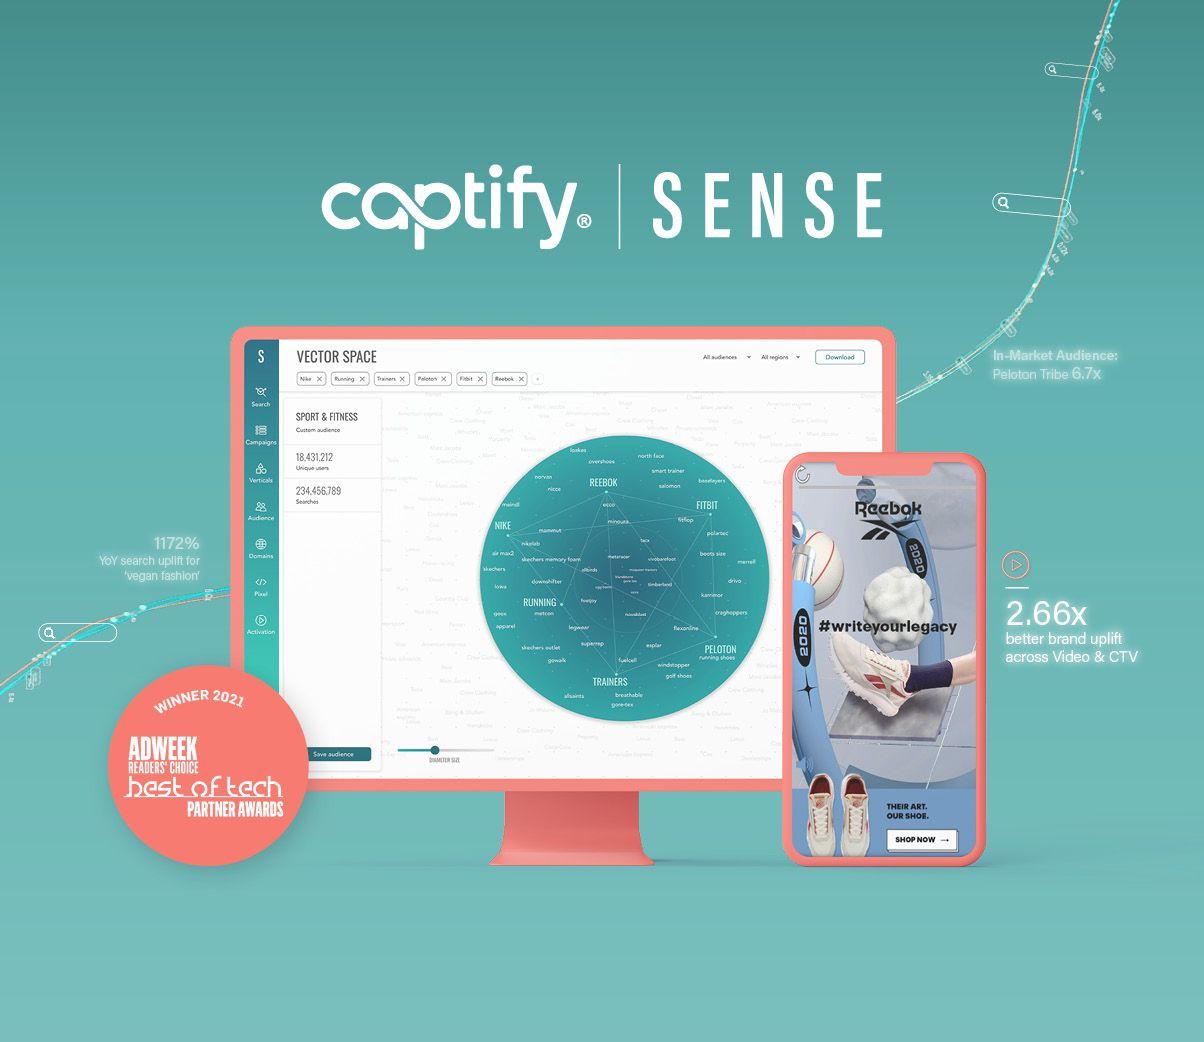 Captify’s Sense Awarded ‘Best Search Marketing Platform’ For Adweek’s Best Of Tech Partner Awards